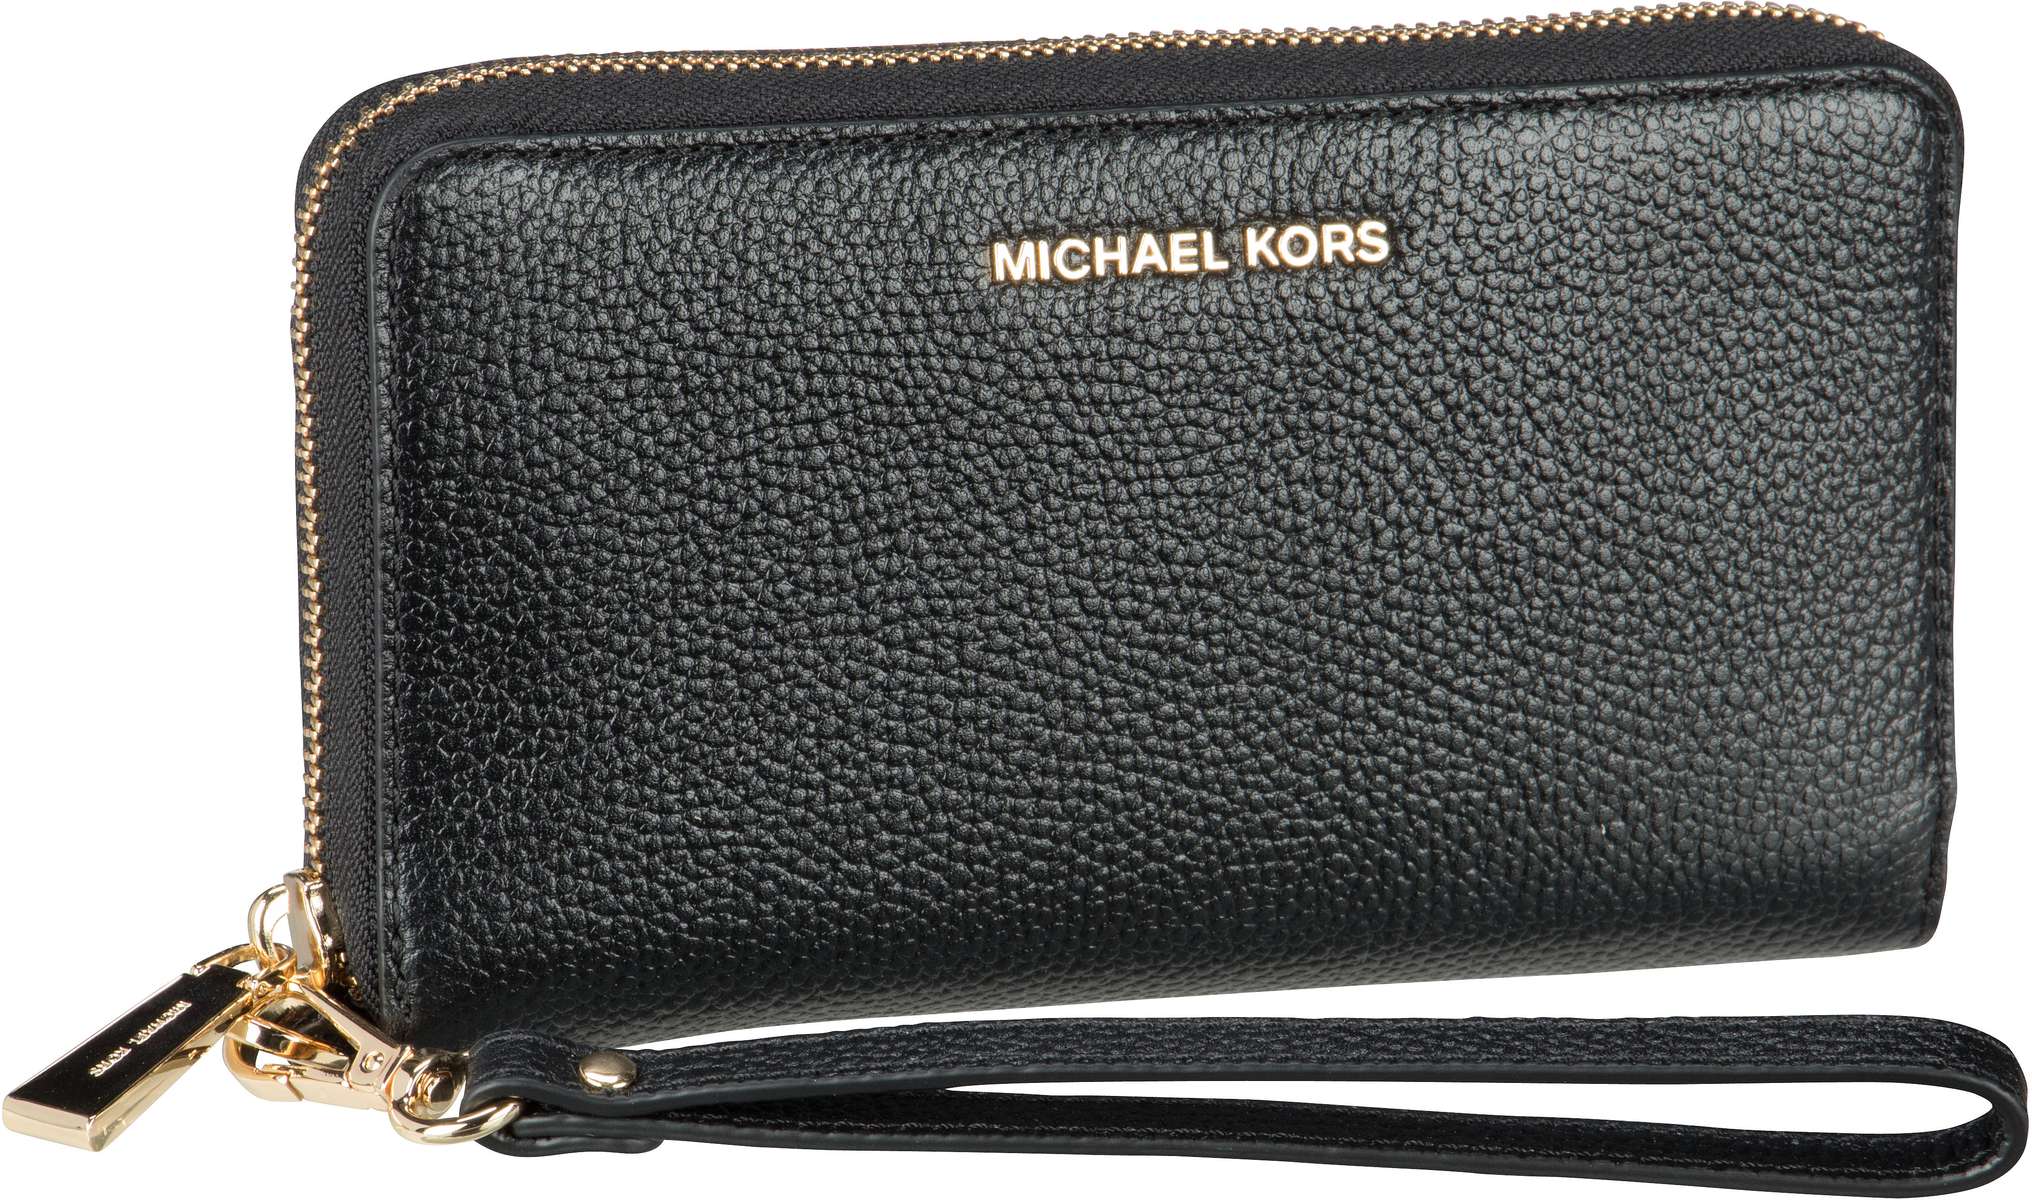 Michael Kors Jet Set Large Flat MF Phone Case Saffiano - Black